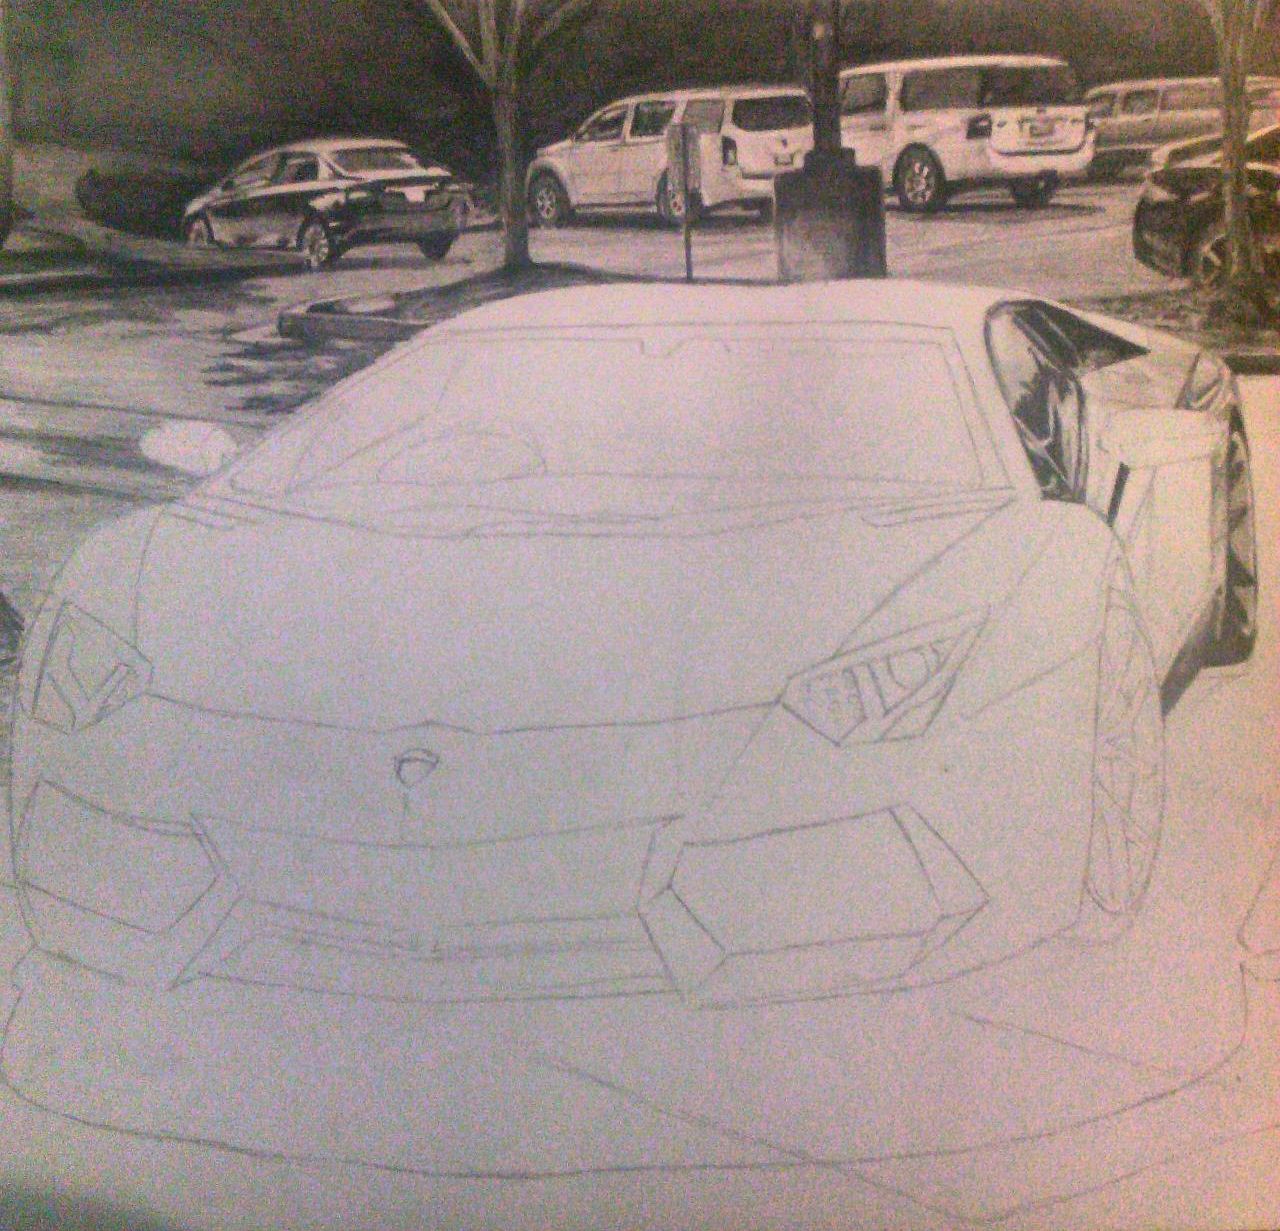 Drawings, Lamborghini Gallardo, Page 6822, Art by Independent Artists